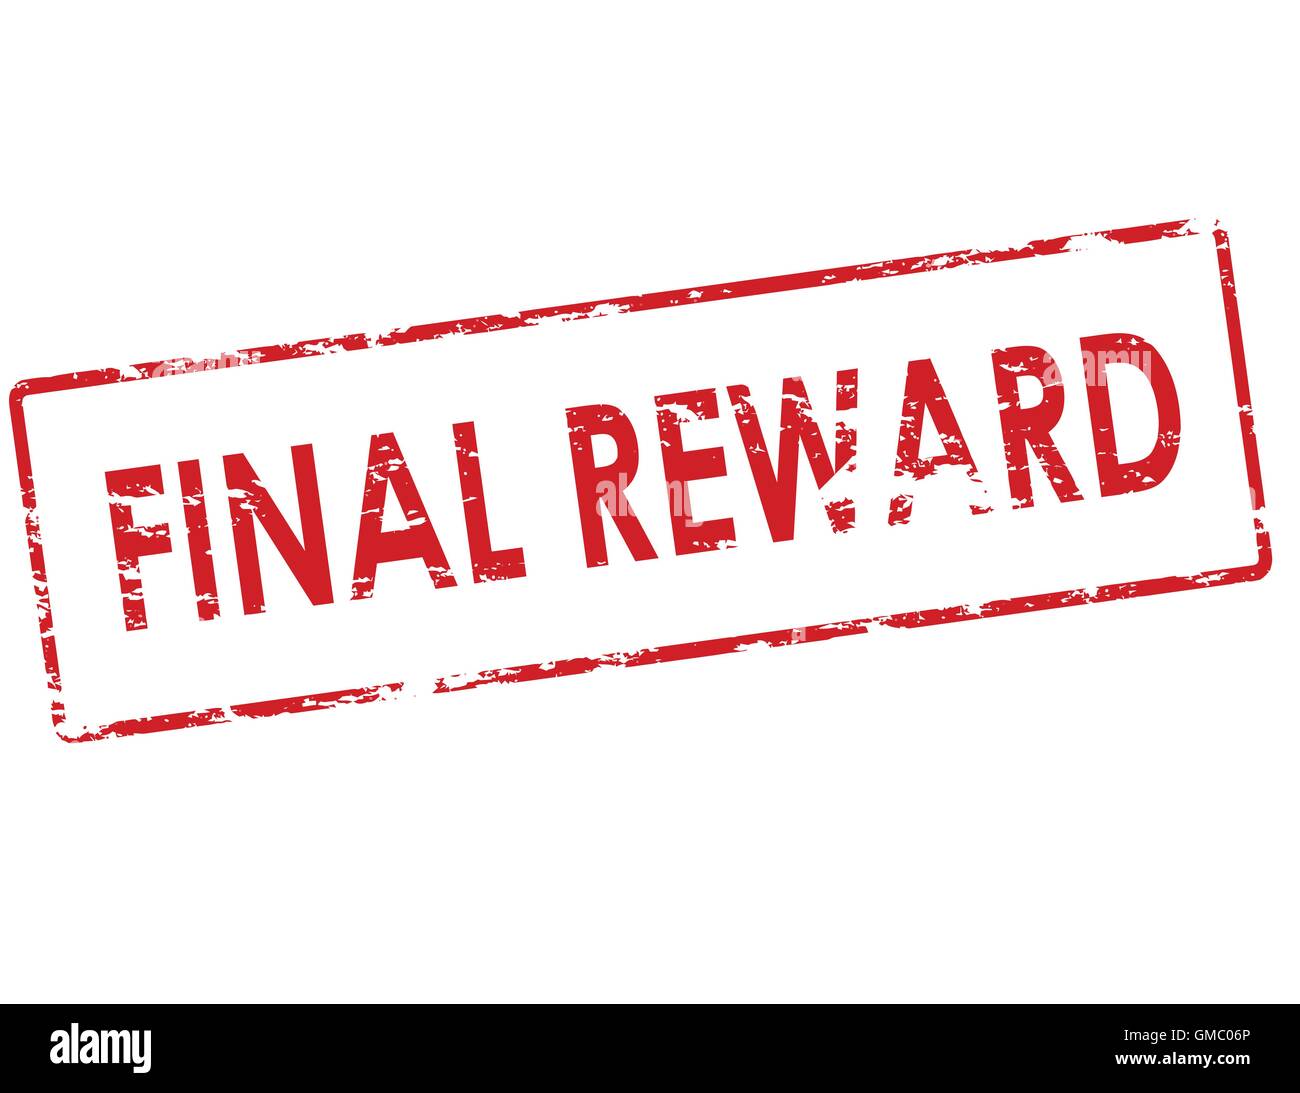 Final reward Stock Vector